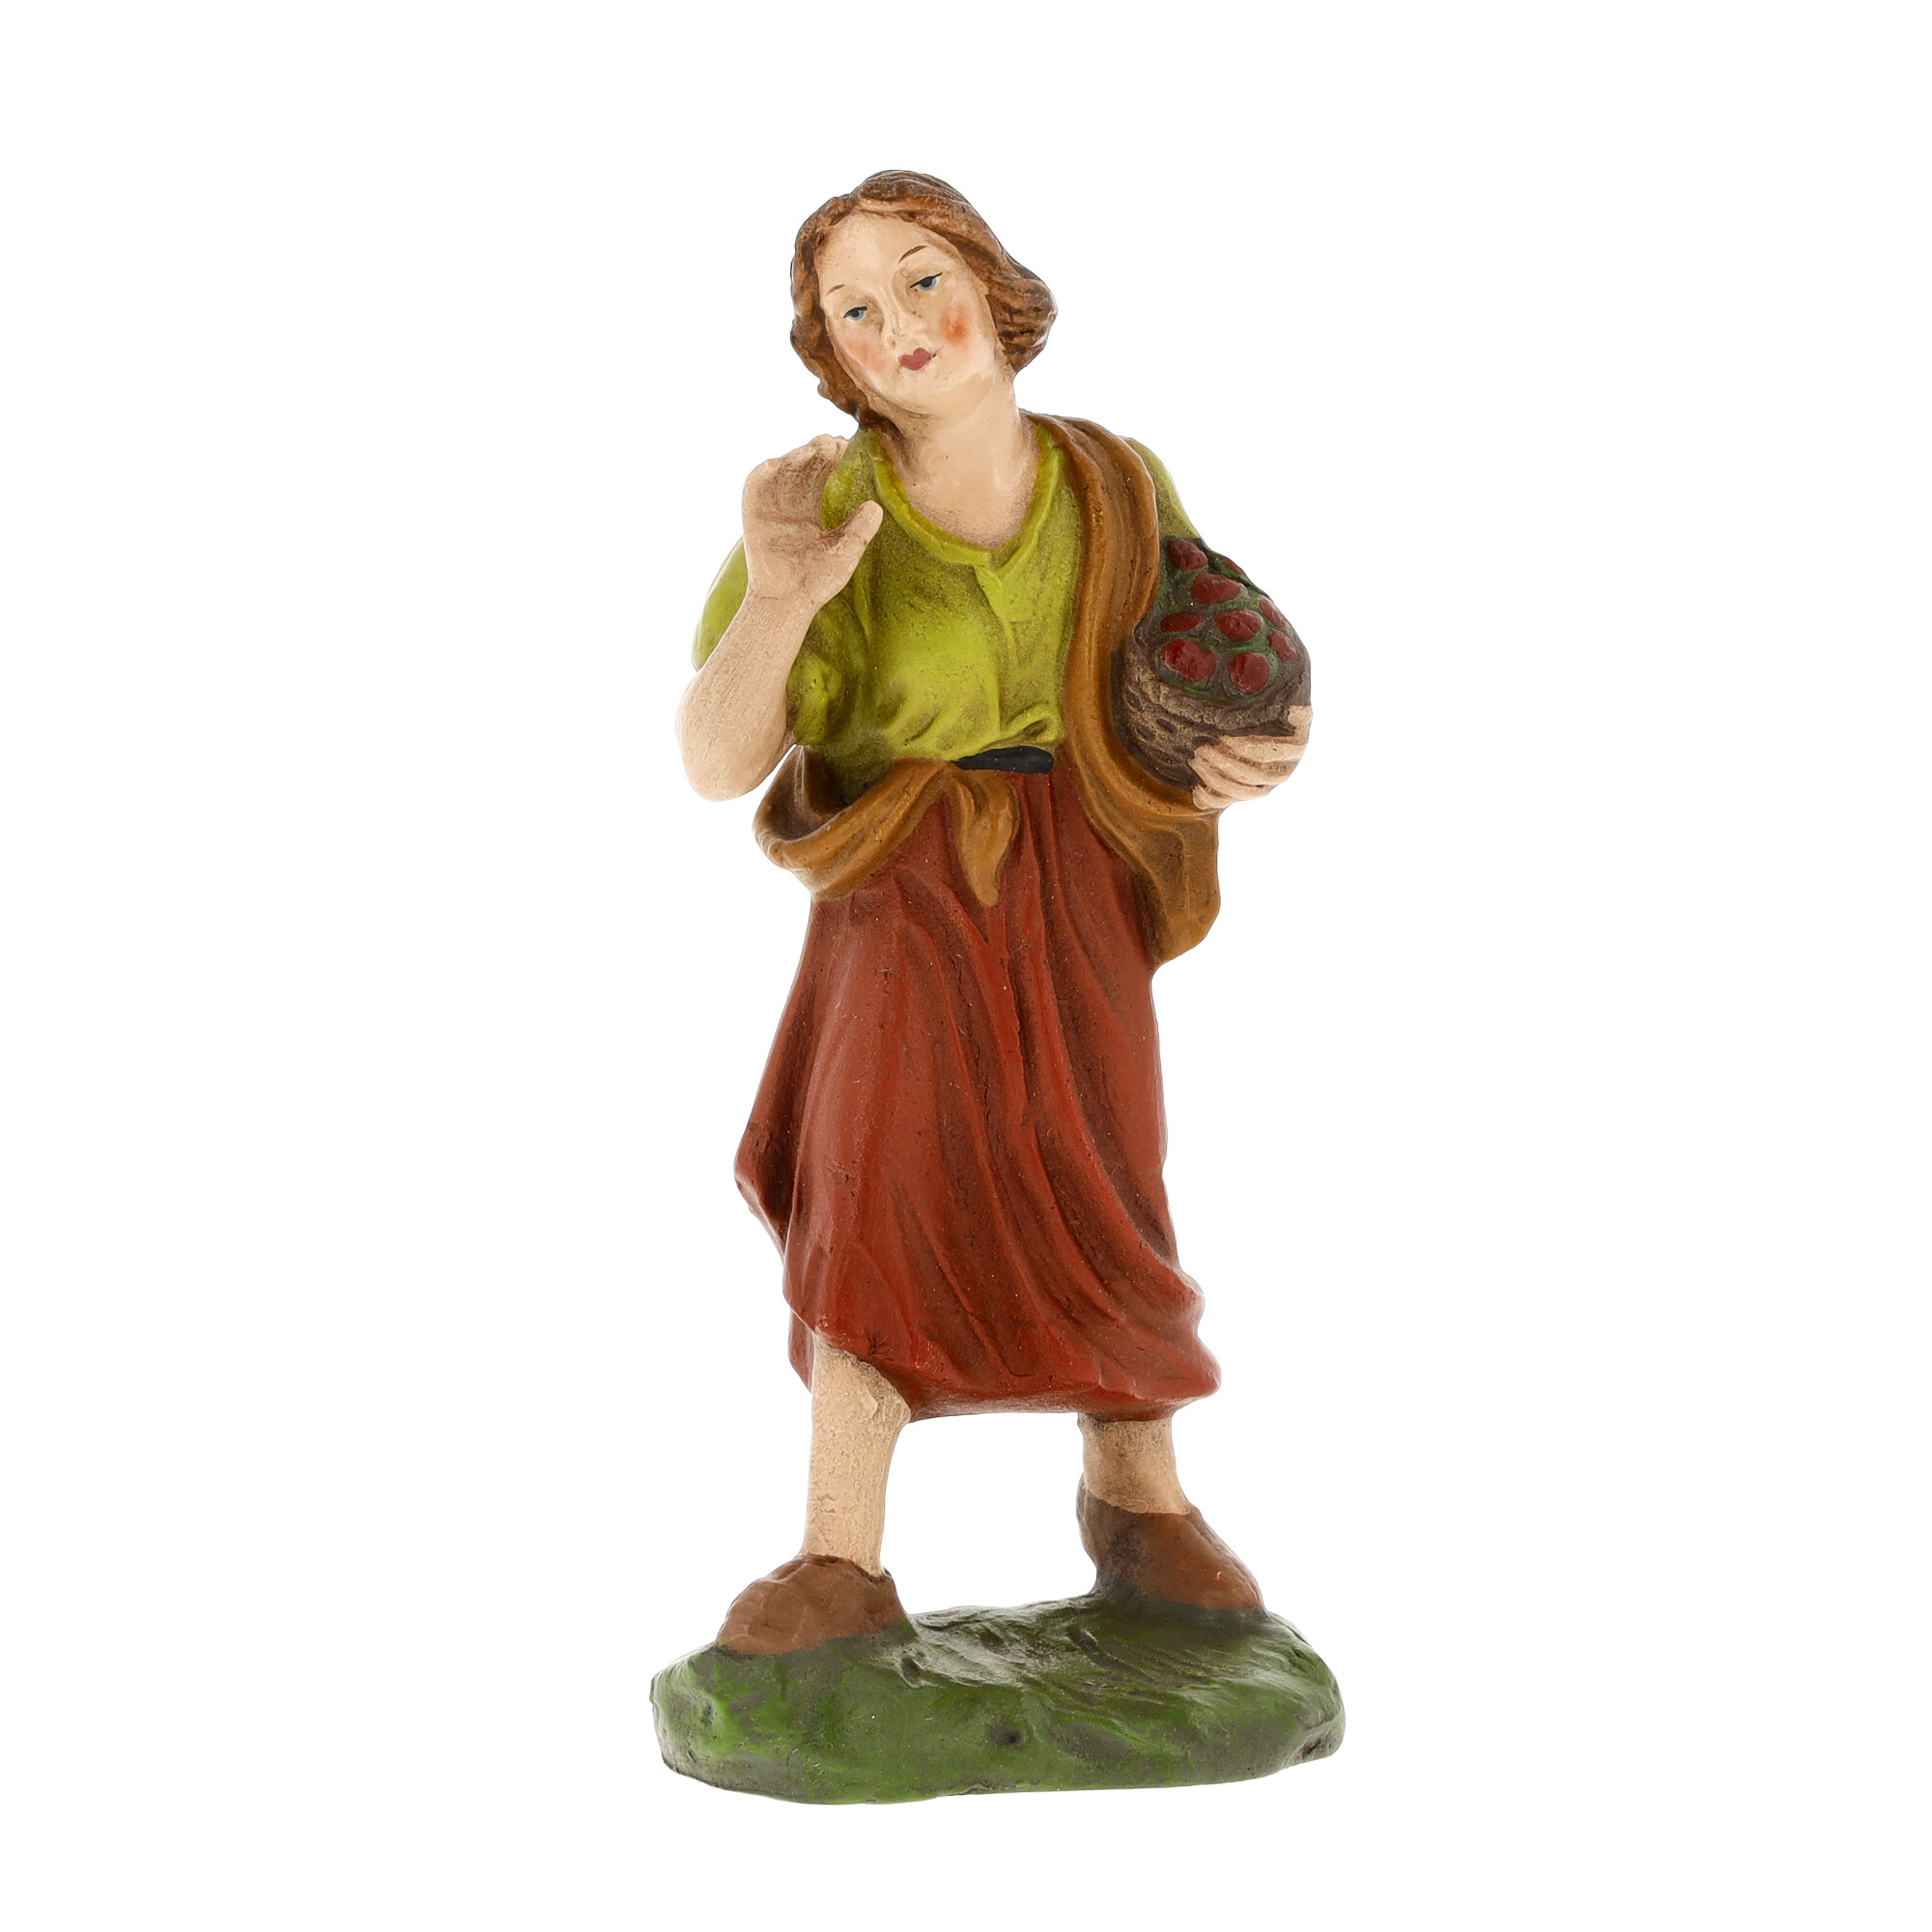 Shepherdess with fruit basket - MAROLIN Nativity figure